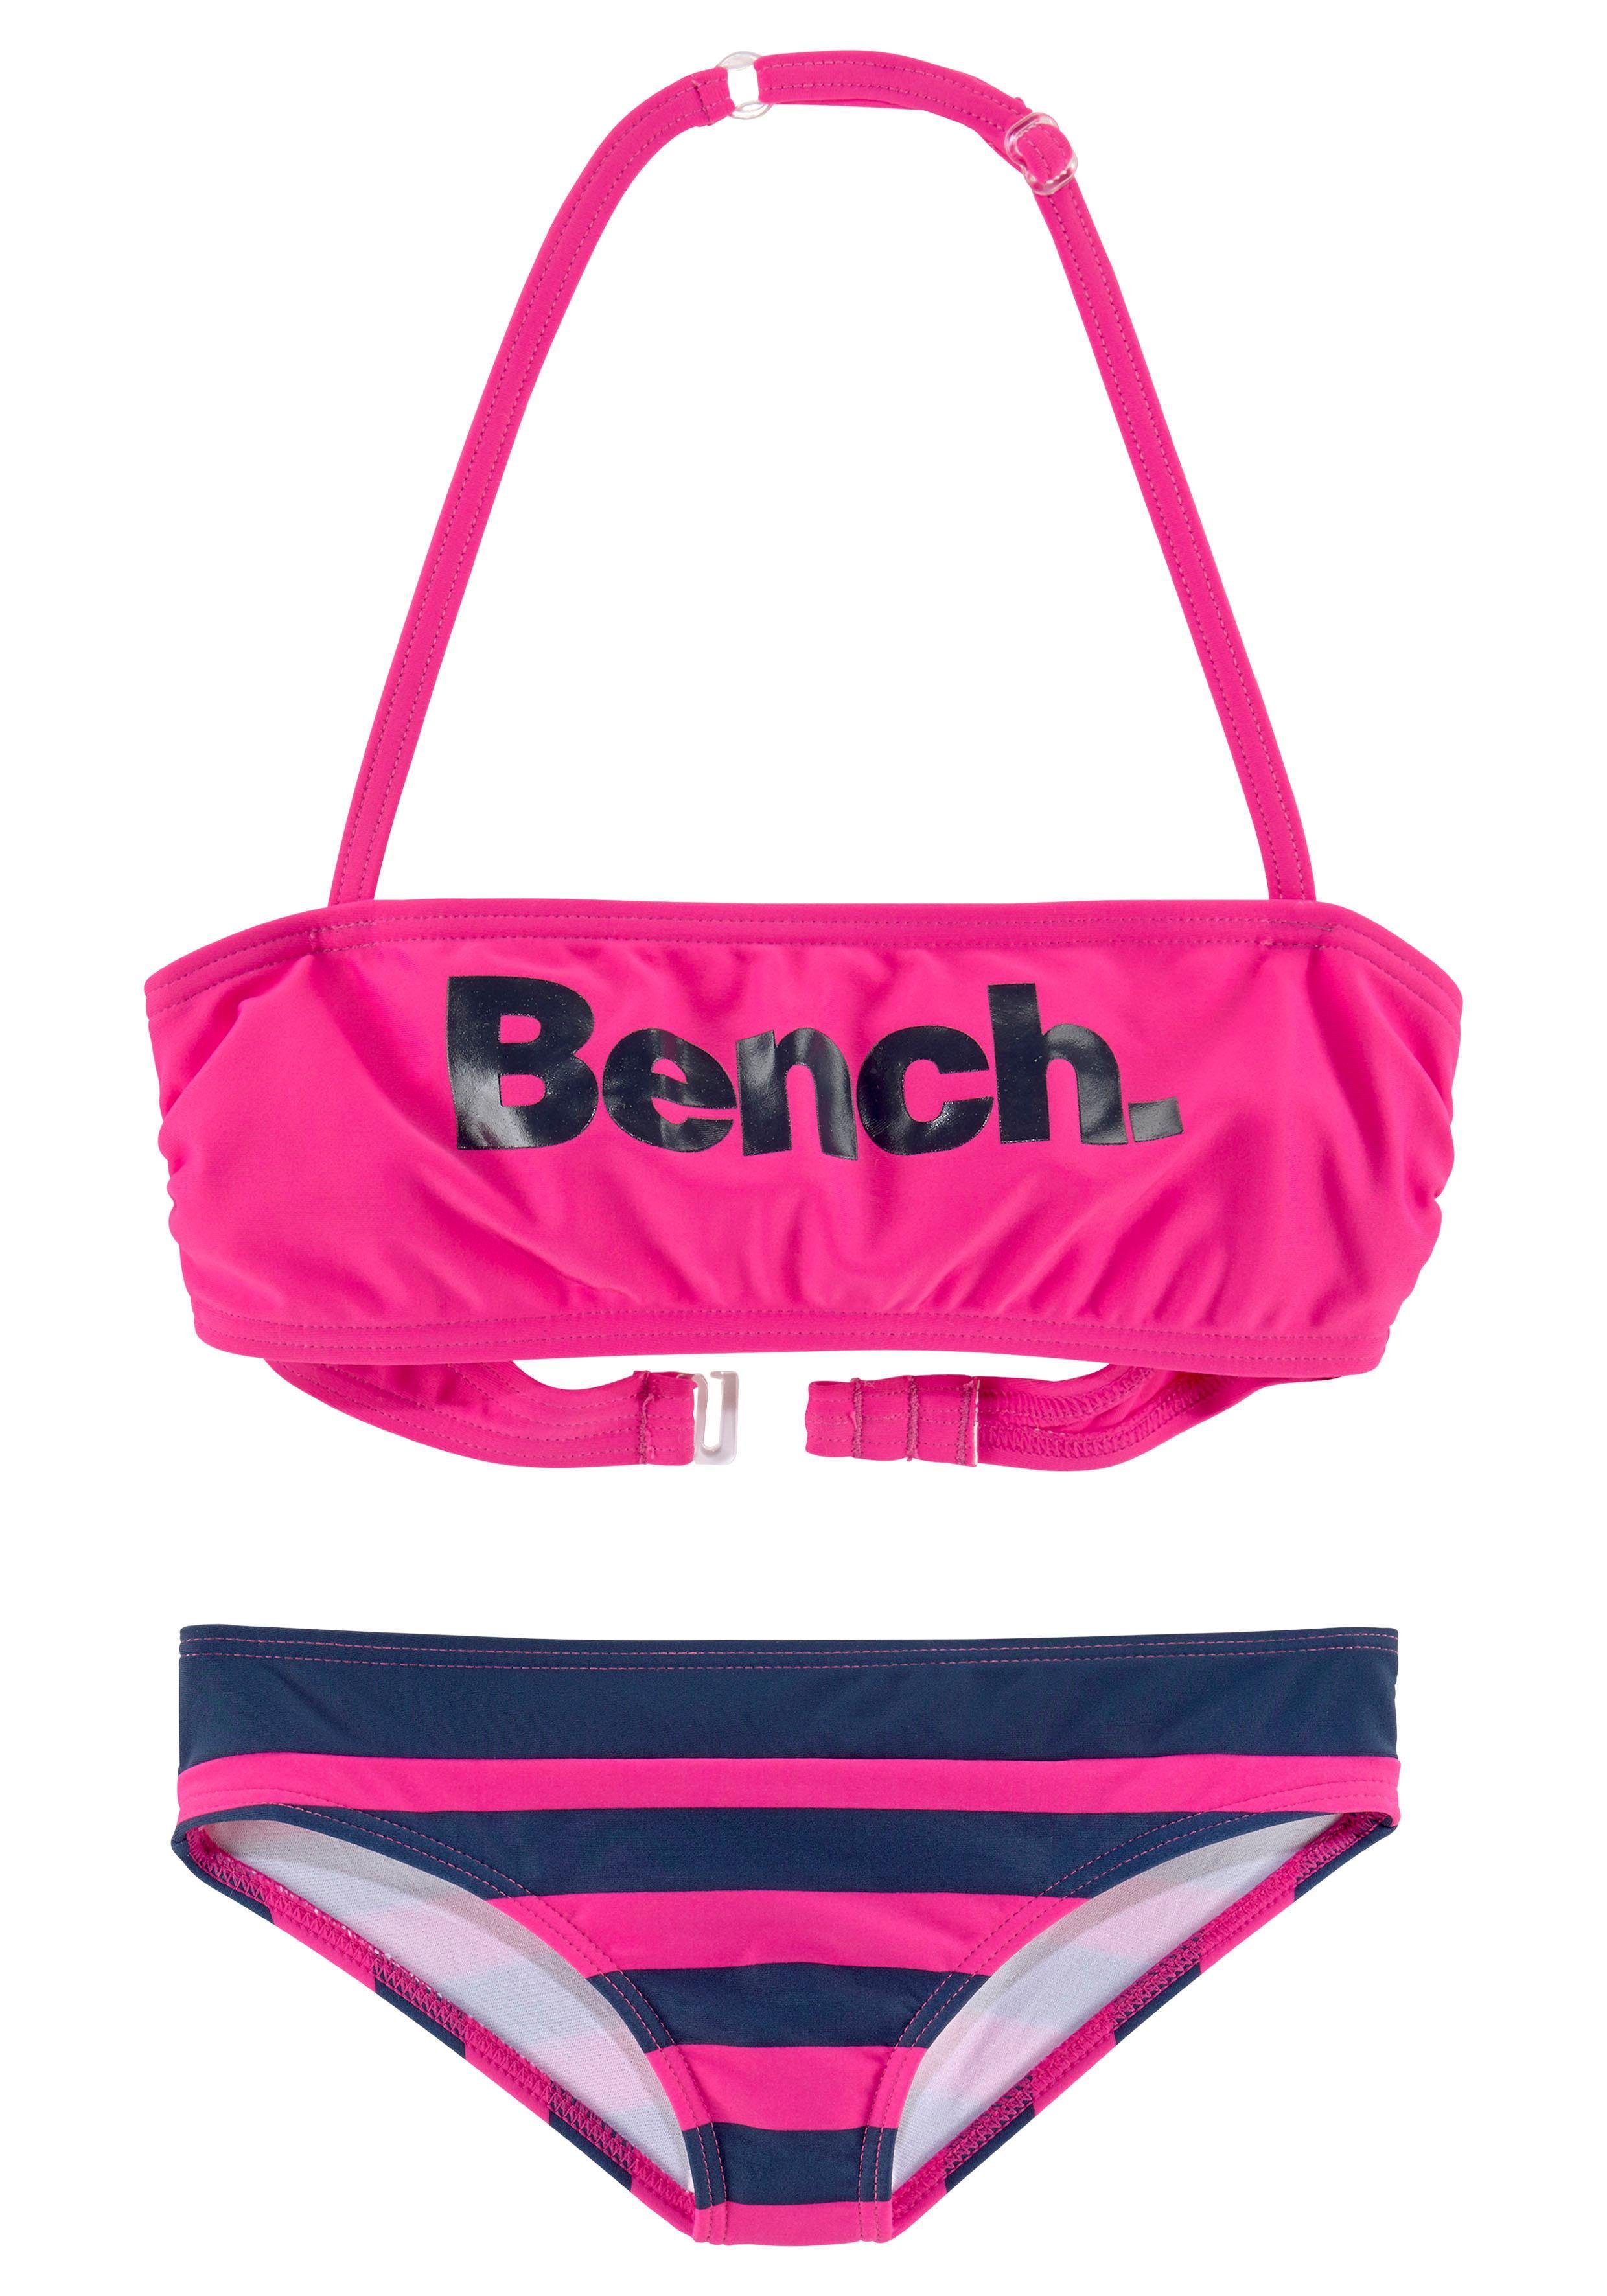 großem Bandeau-Bikini mit Bench. pink-marine Logoprint